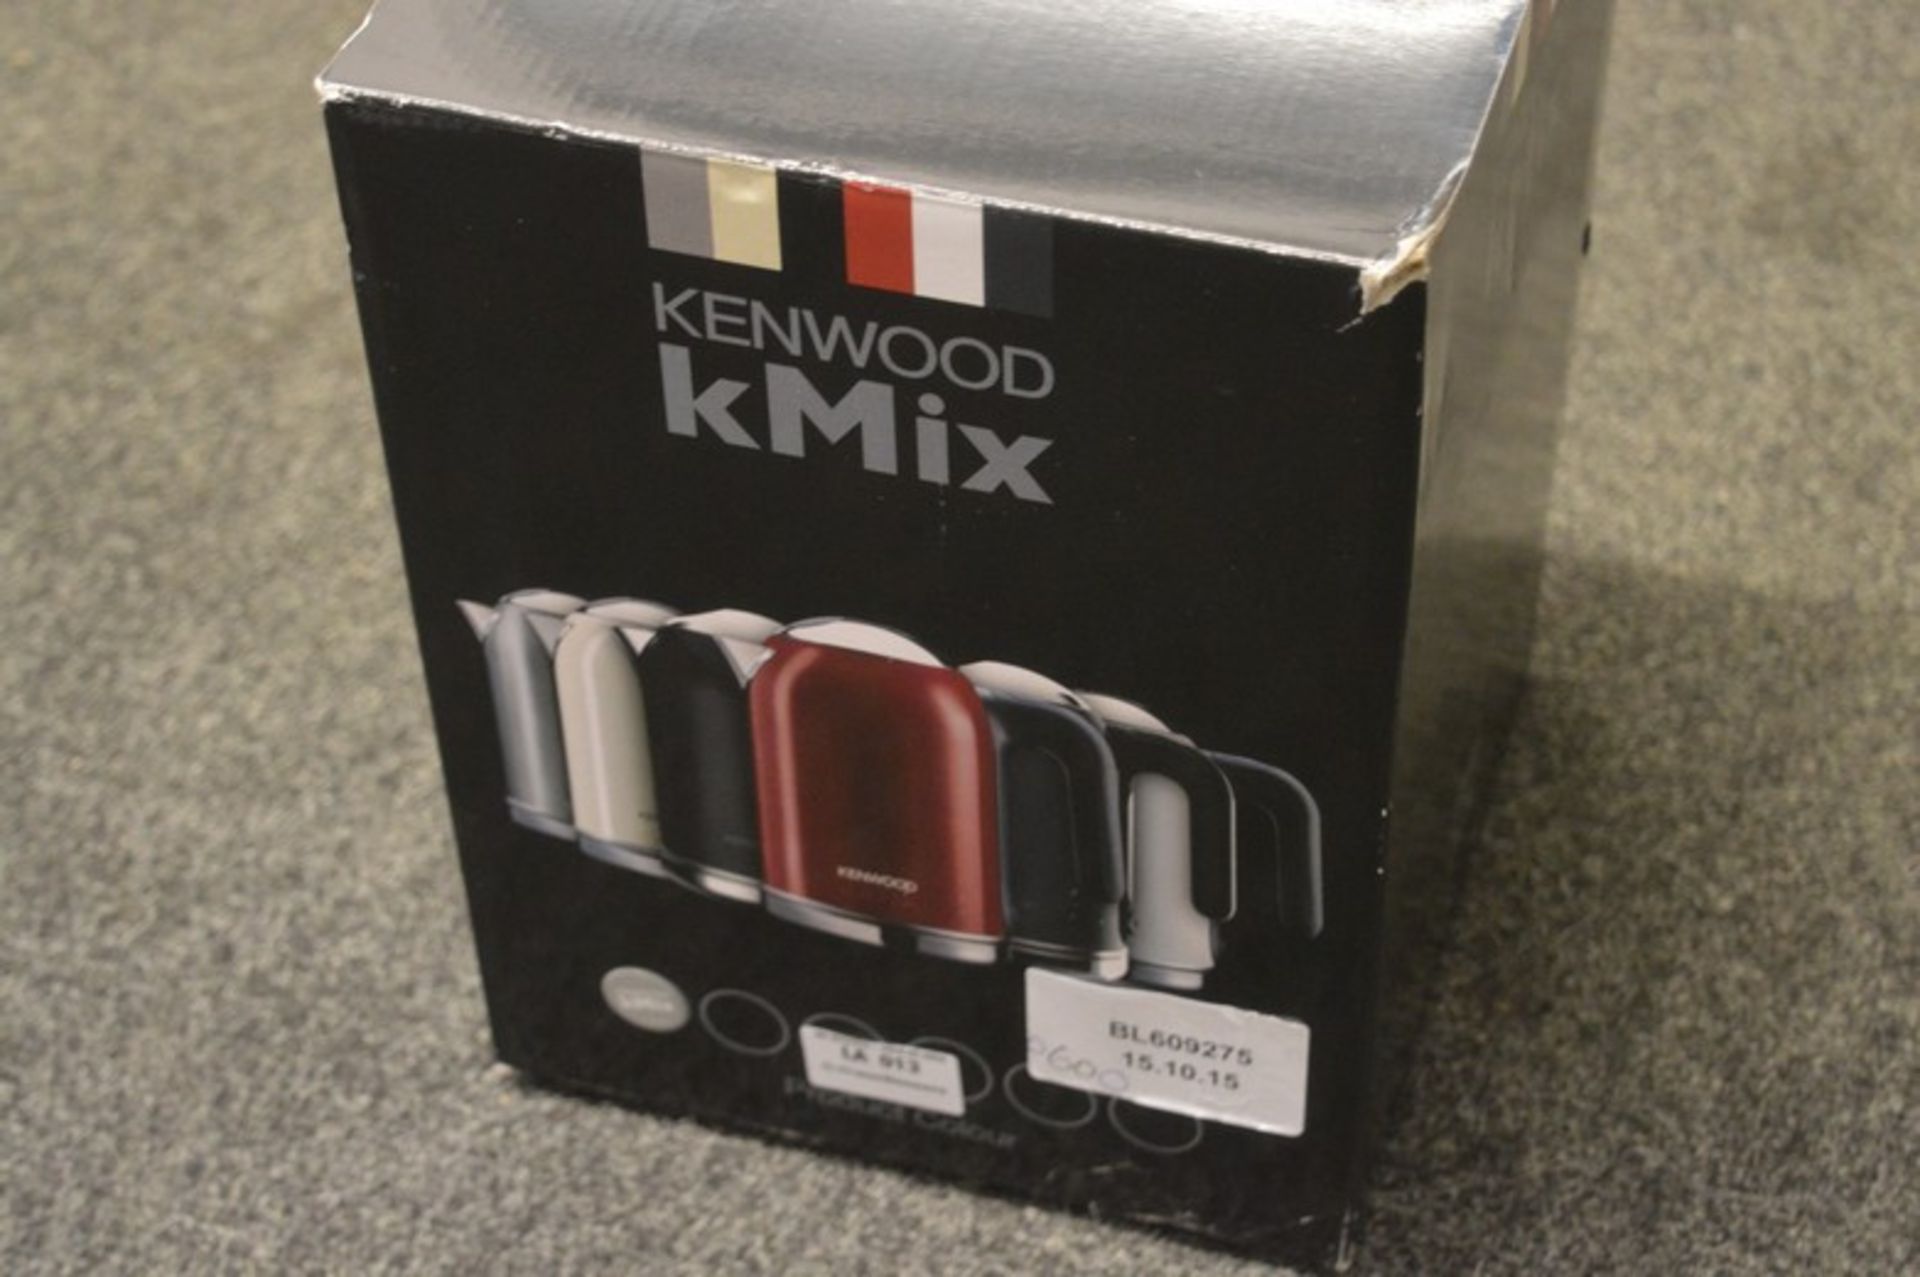 BOXED KENWOOD K MIX 1.6 LITRE CAPACITY 3000 WATT KETTLE RRP £60.00 15/10/15